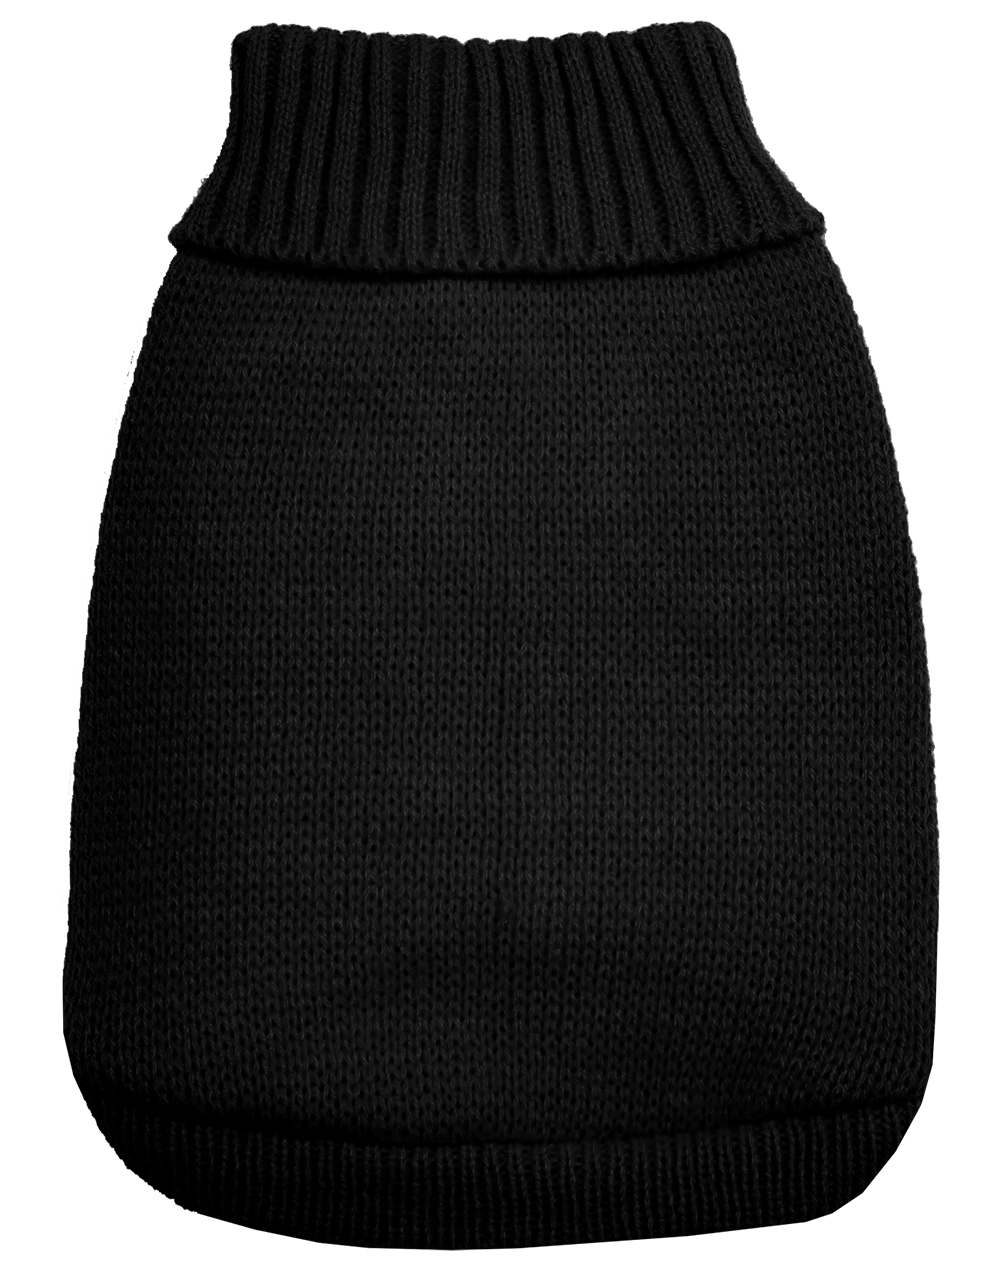 Knit Pet Sweater Black Size 6X